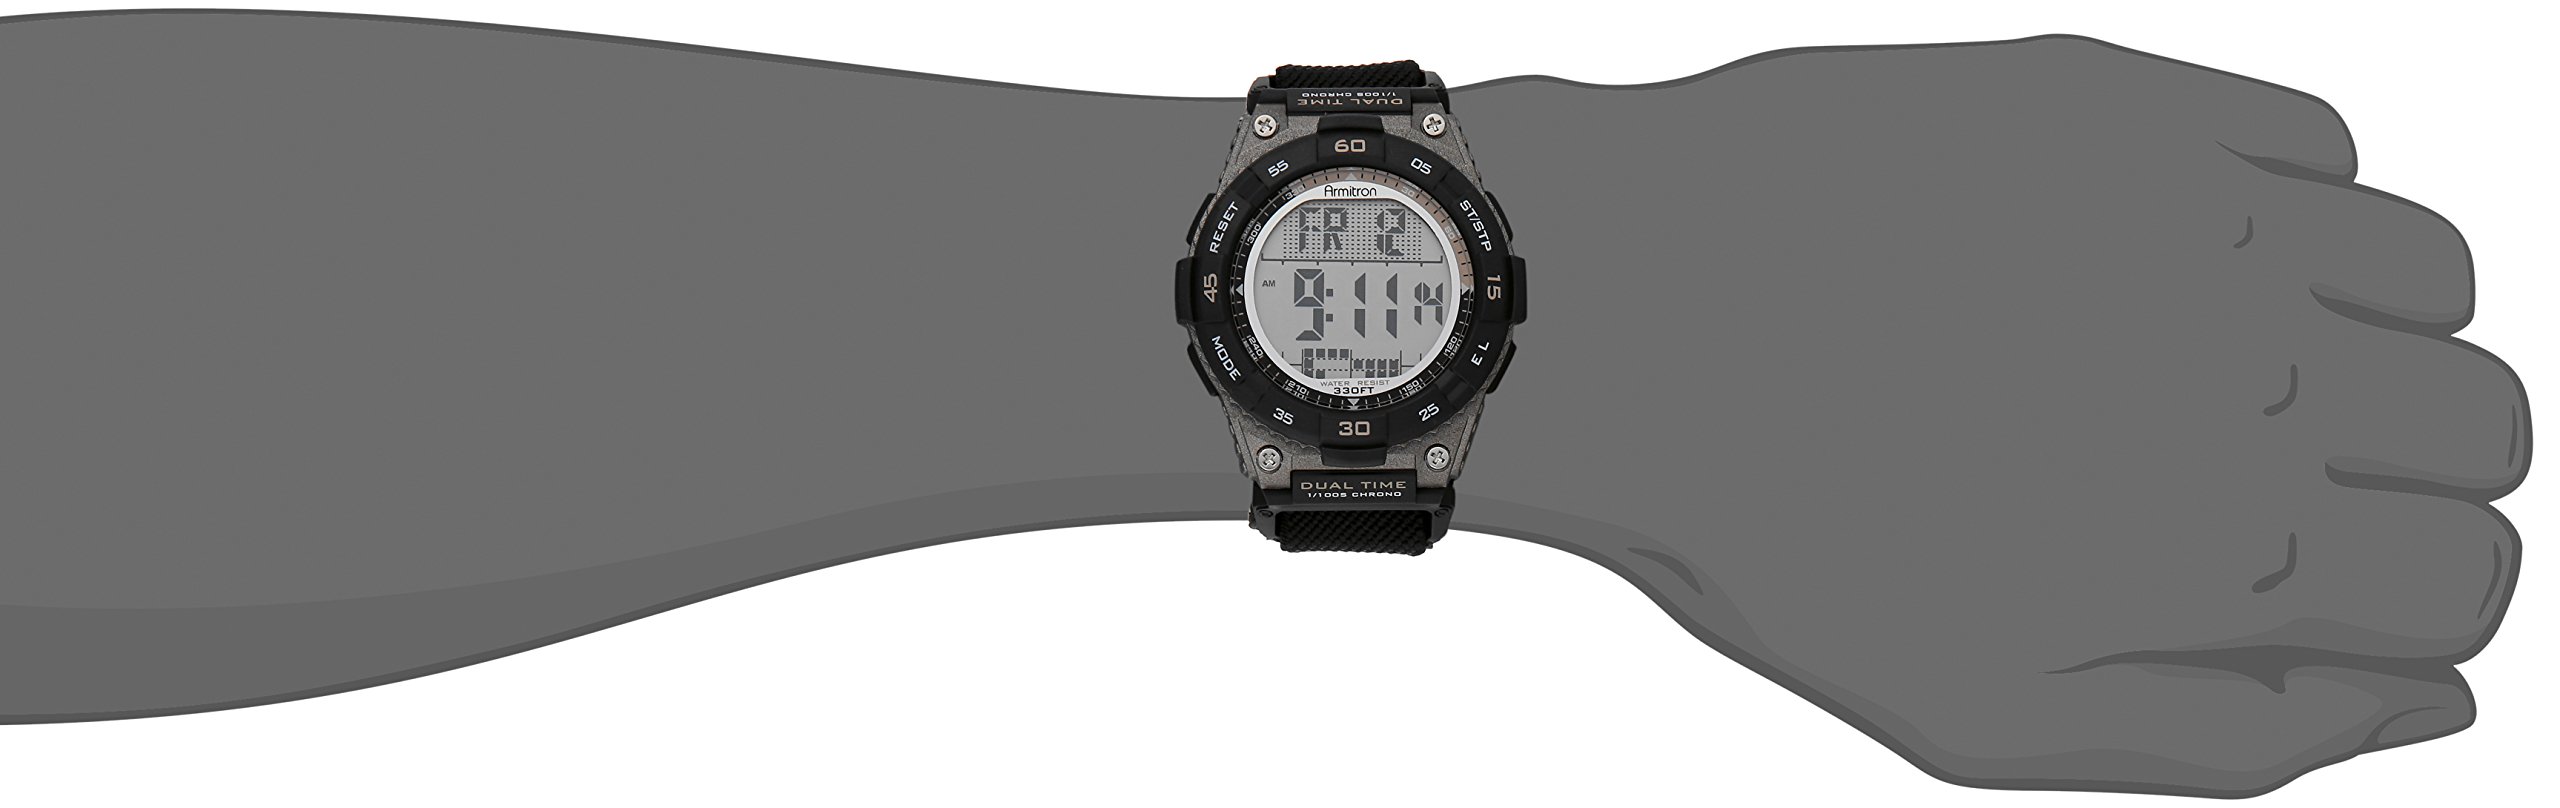 Armitron Sport Men's 40/8330BLK Brown Accented Digital Chronograph Black Nylon Strap Watch